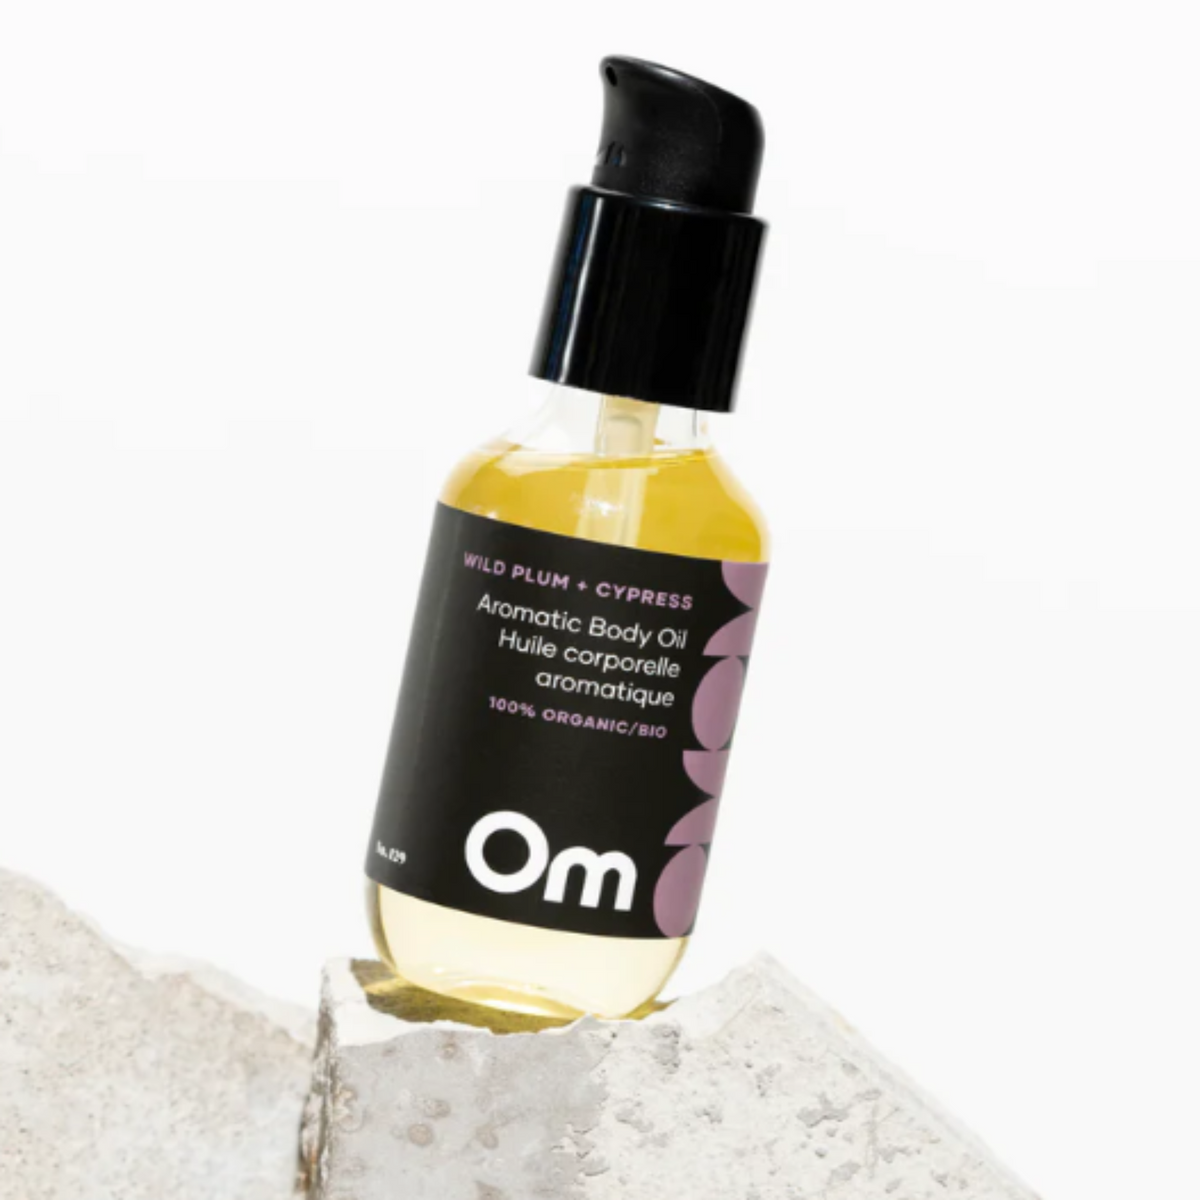 Wild Plum + Cypress Aromatic Body Oil